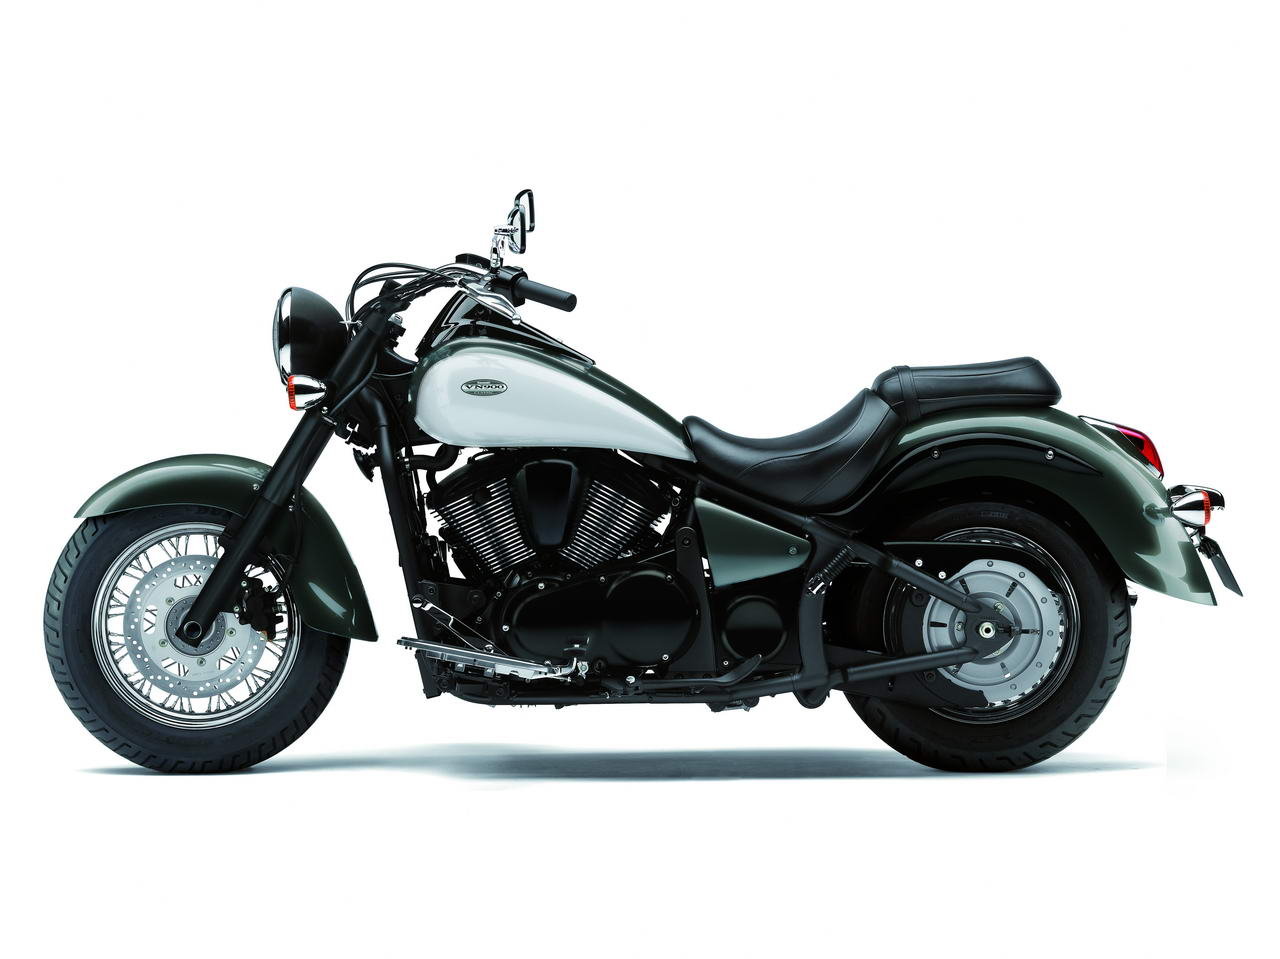 Listino Kawasaki KLX 125 Moto 50 e 125 - image 15541_kawasaki-vn900-custom on https://moto.motori.net